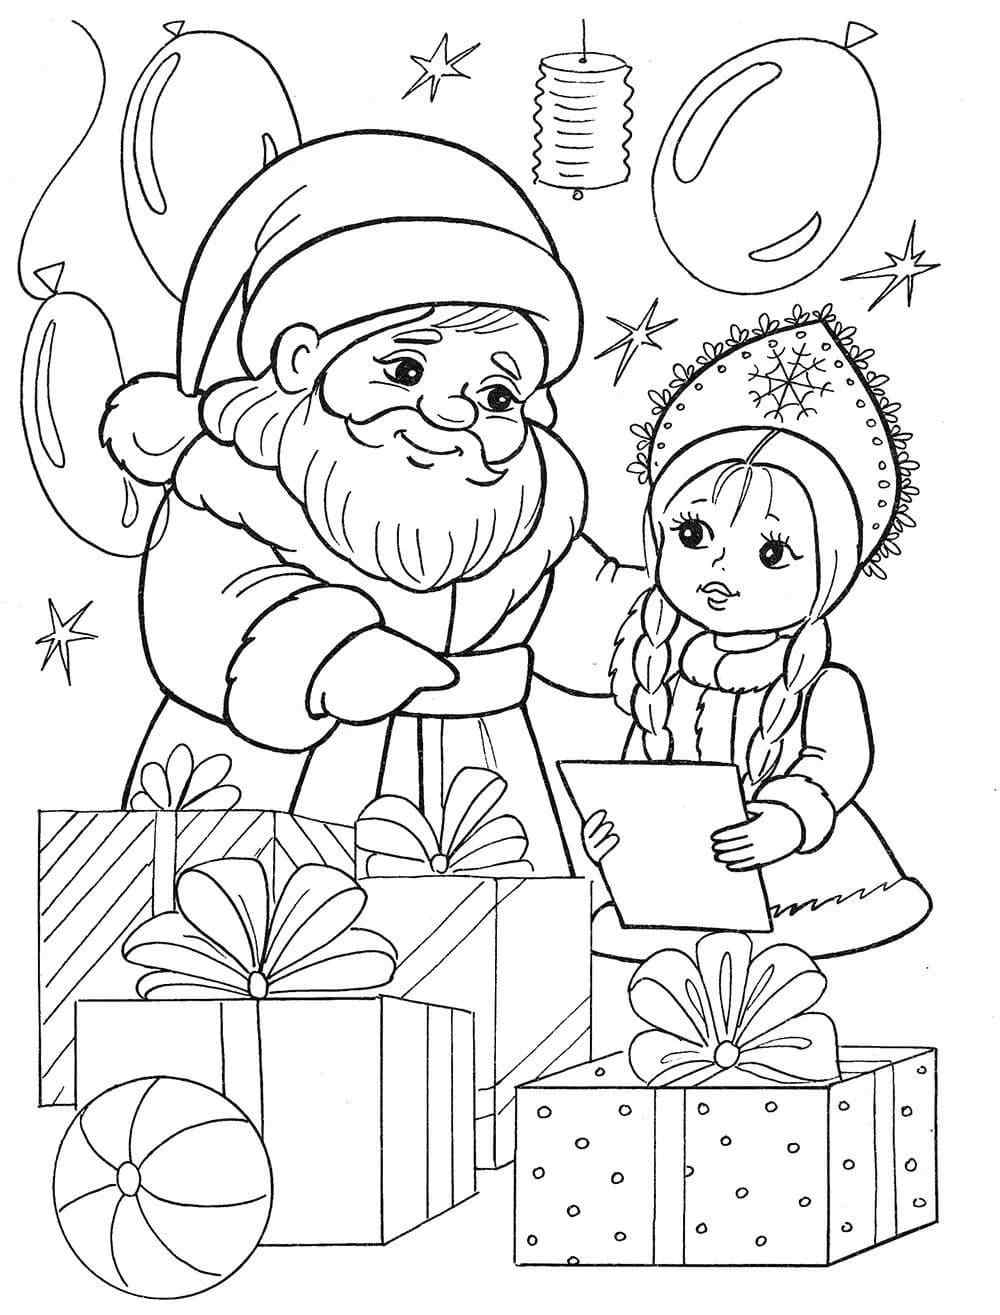 Snegurochka And Santa Claus Coloring Page